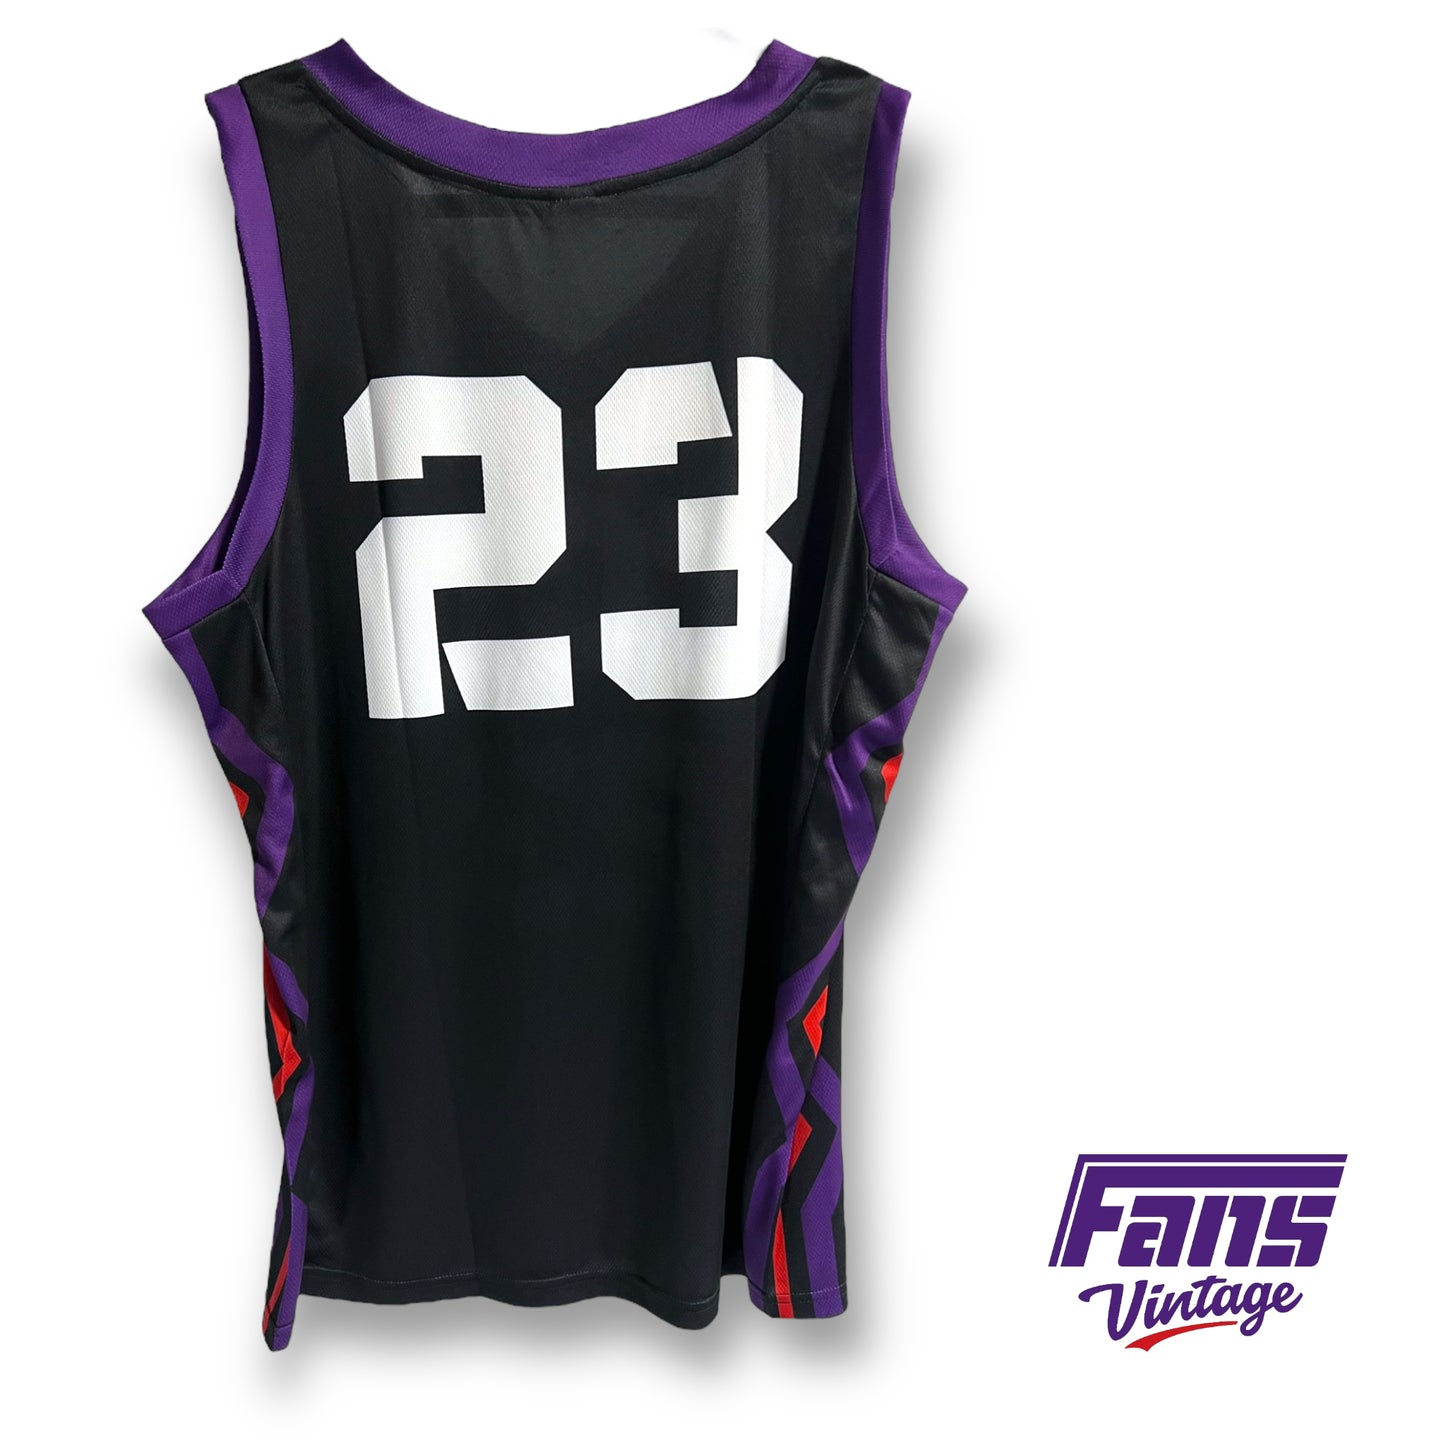 TCU Basketball black jersey - Limited Edition